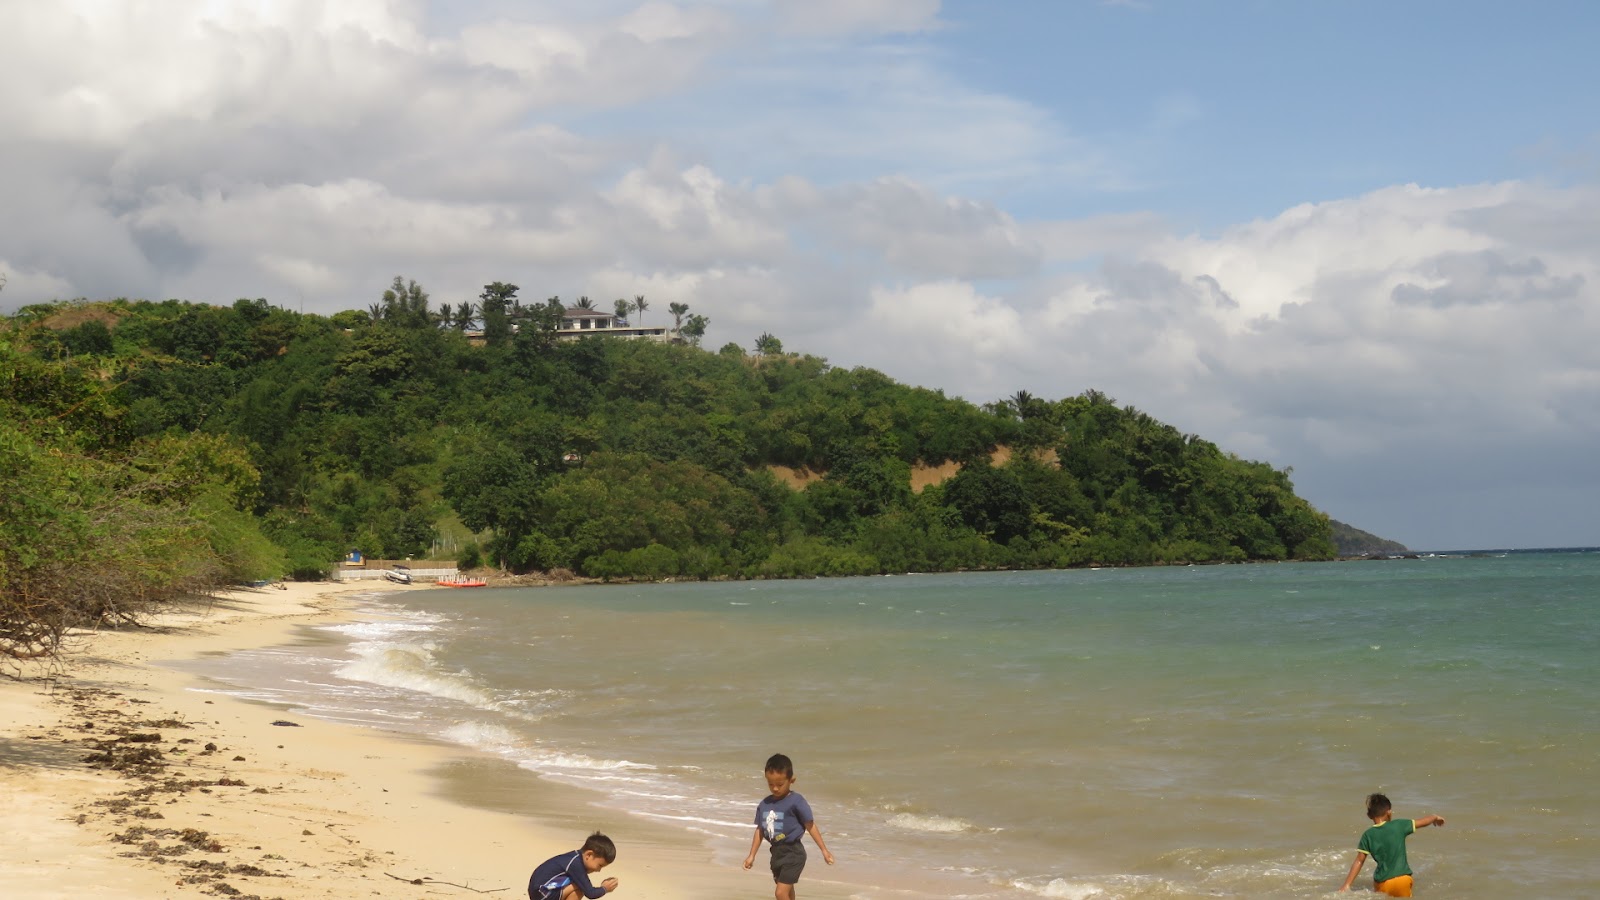 Foto di Buktot Beach ubicato in zona naturale